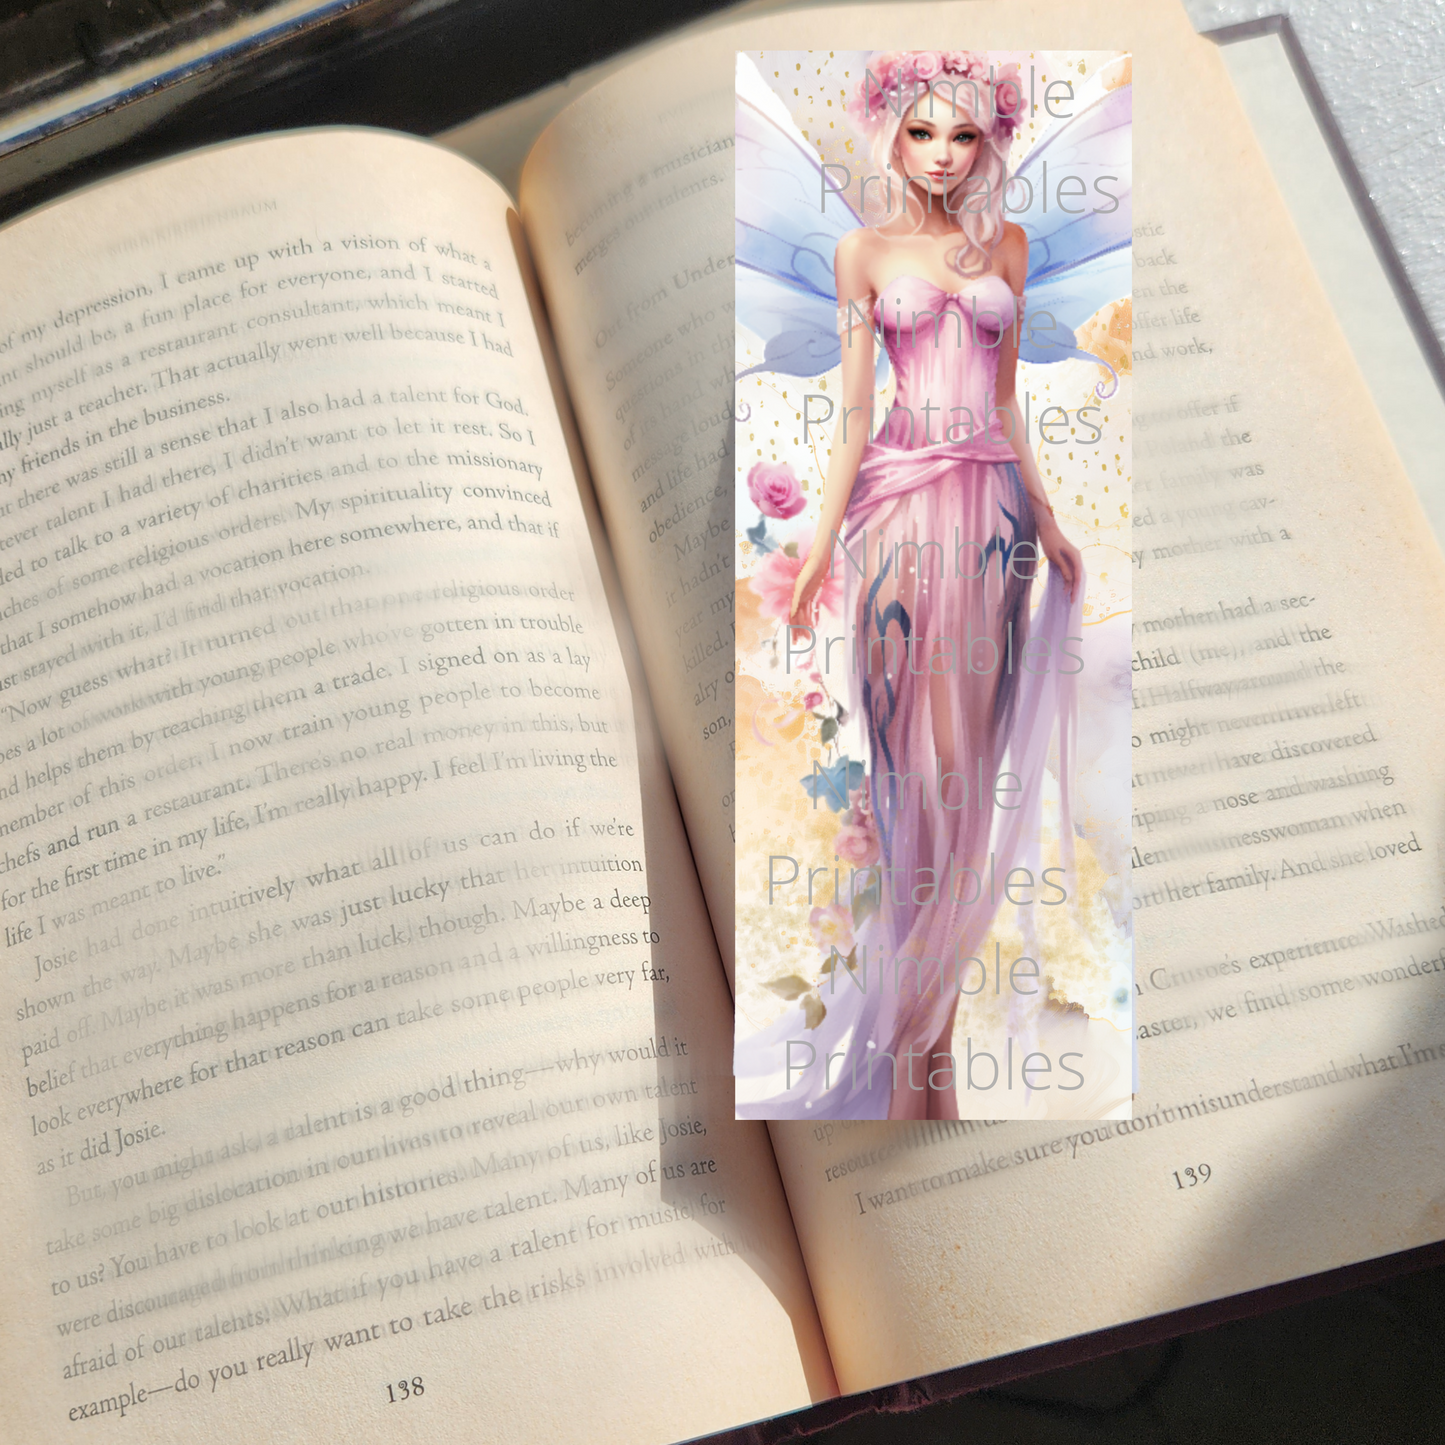 Fantasy Fairy Printable Bookmarks Bundle, Digital Downloads, Watercolor Bookmark, 15 PNG and 15 JPG Bookmark Sublimation Book Lover